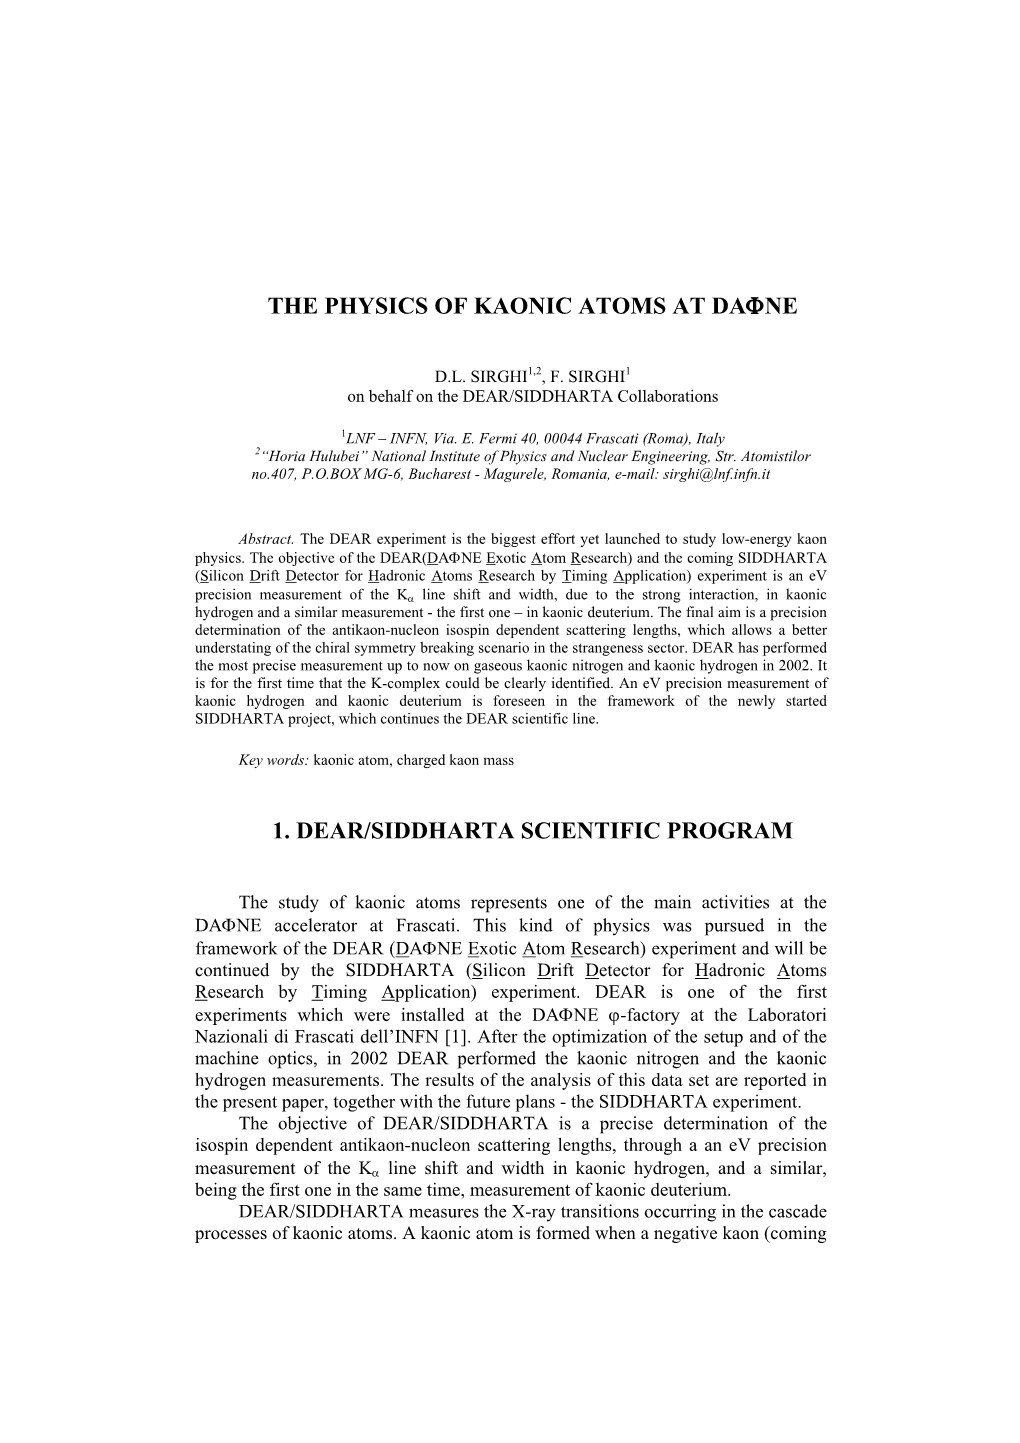 The Physics of Kaonic Atoms at Daφne 1. Dear/Siddharta